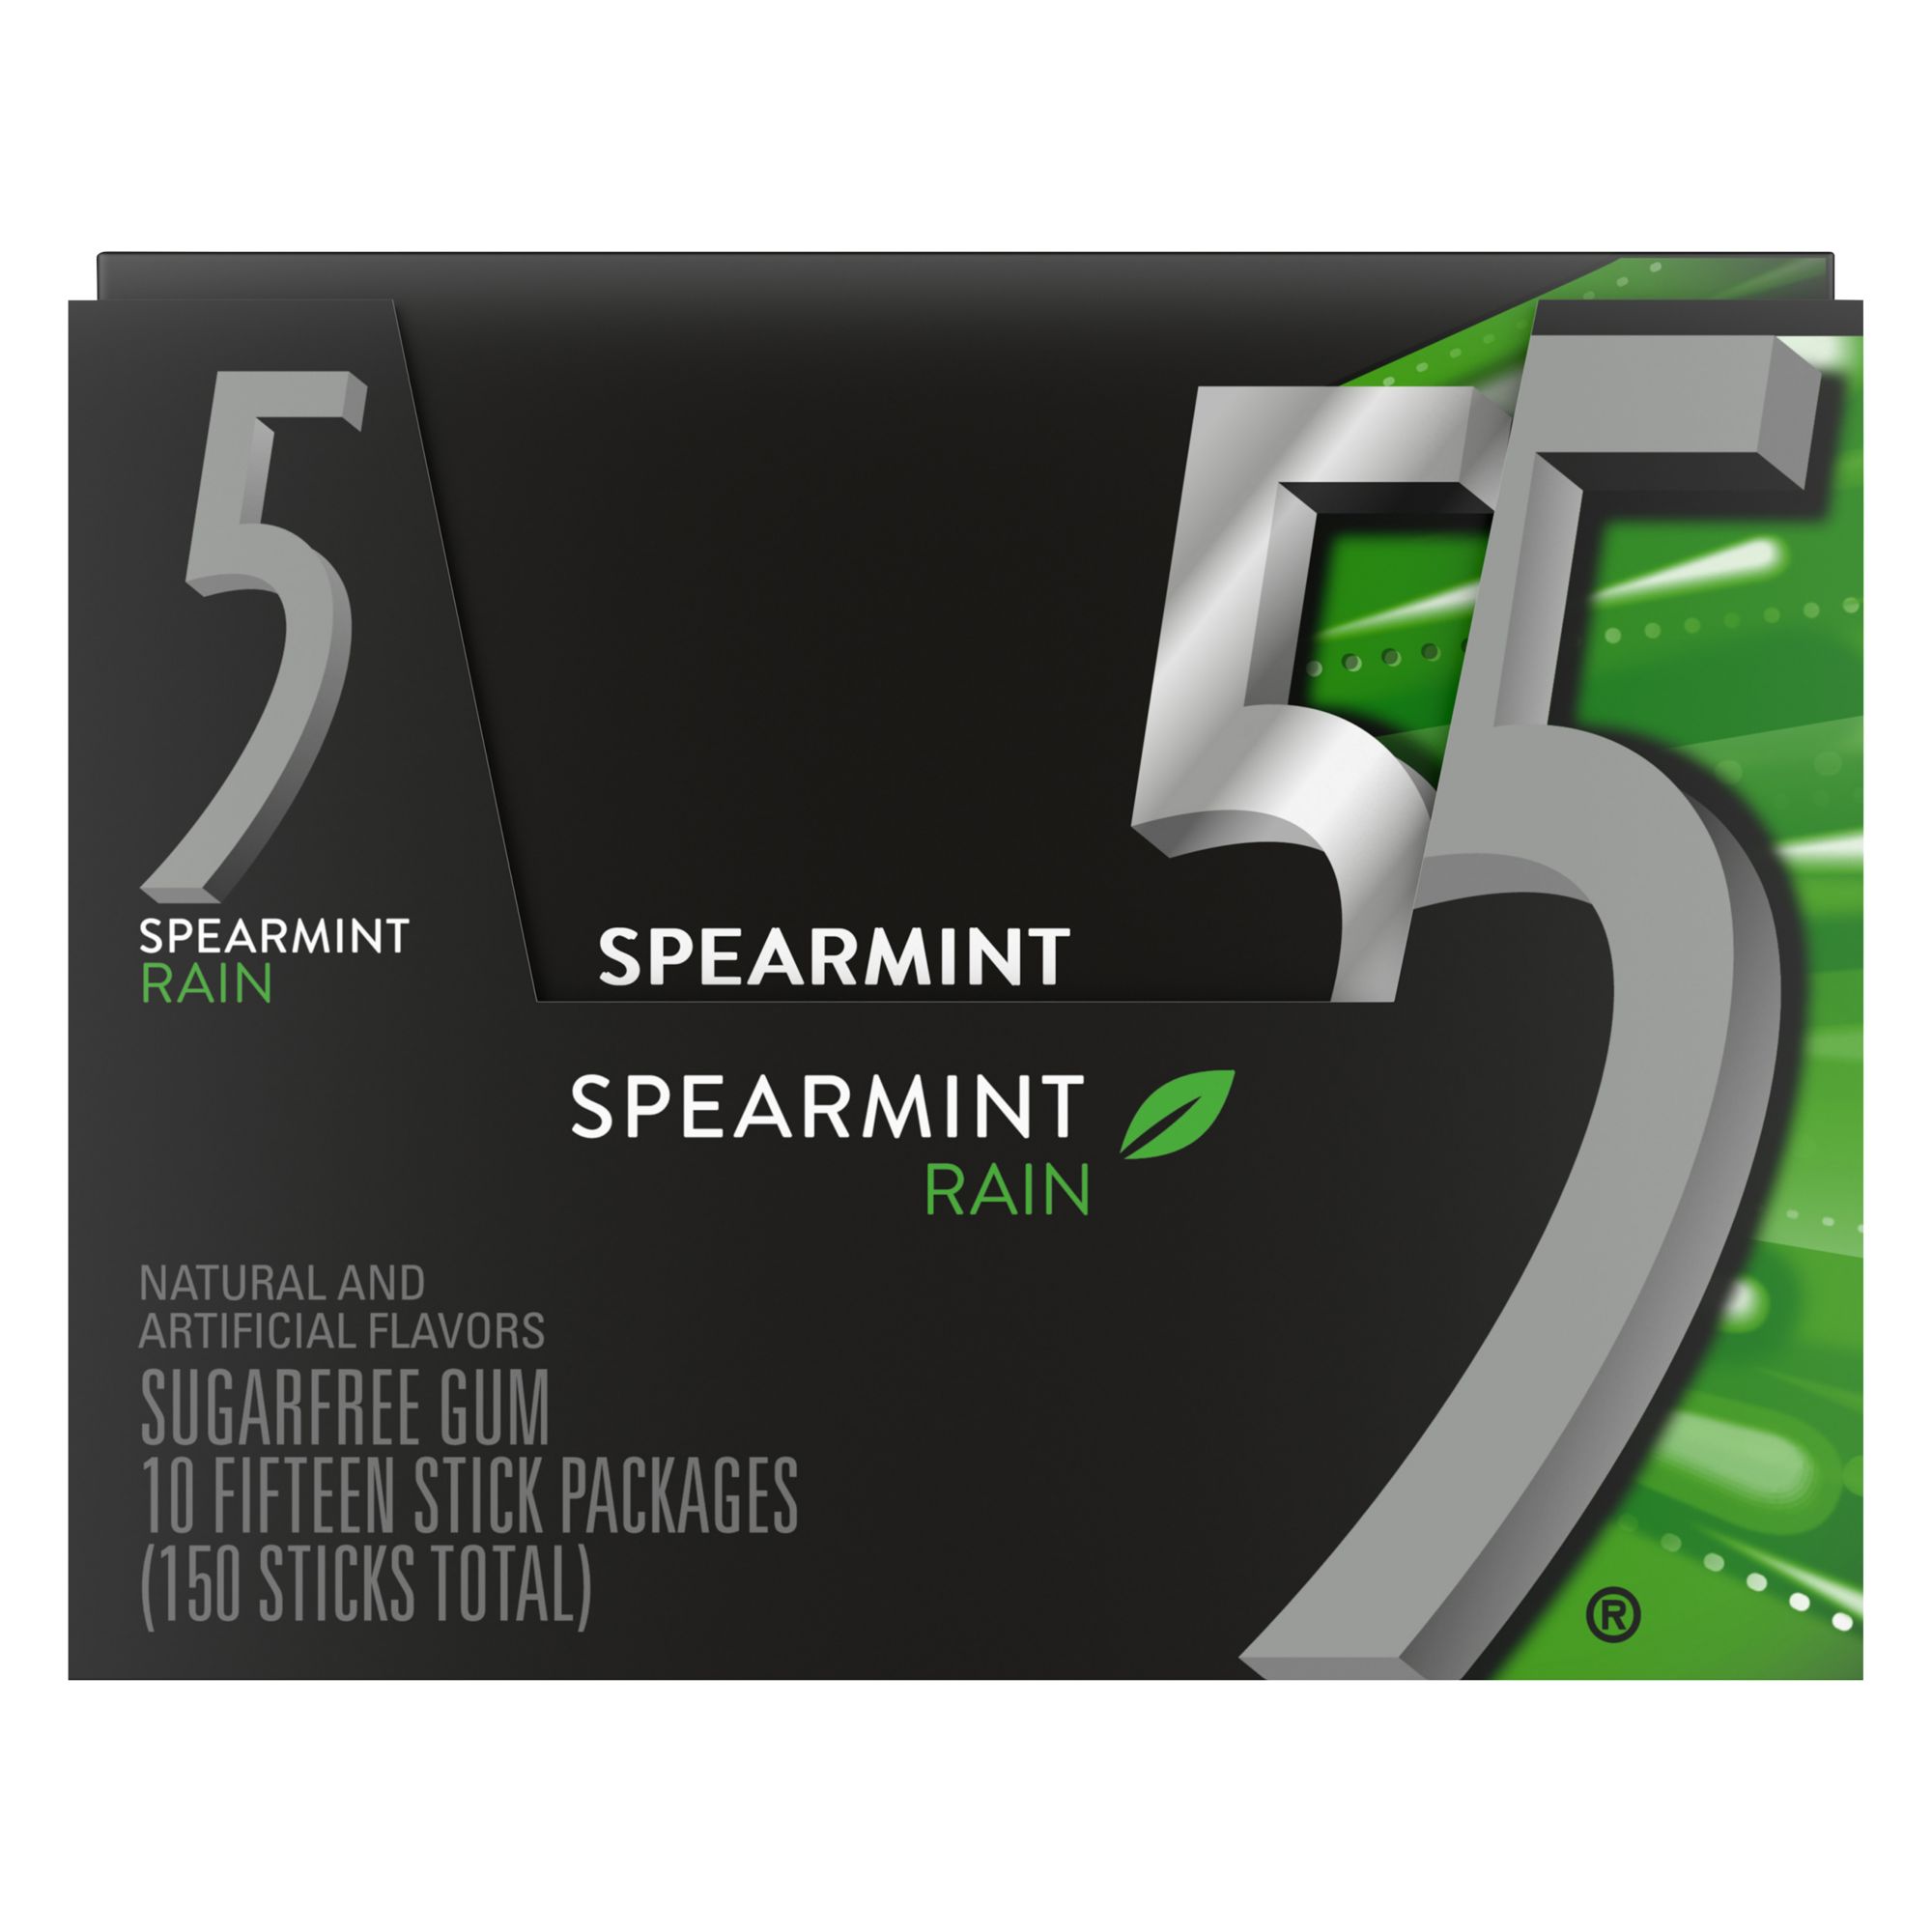 5 Gum Spearmint Rain Sugarfree Chewing Gum, 15-Stick Pack (Pack of